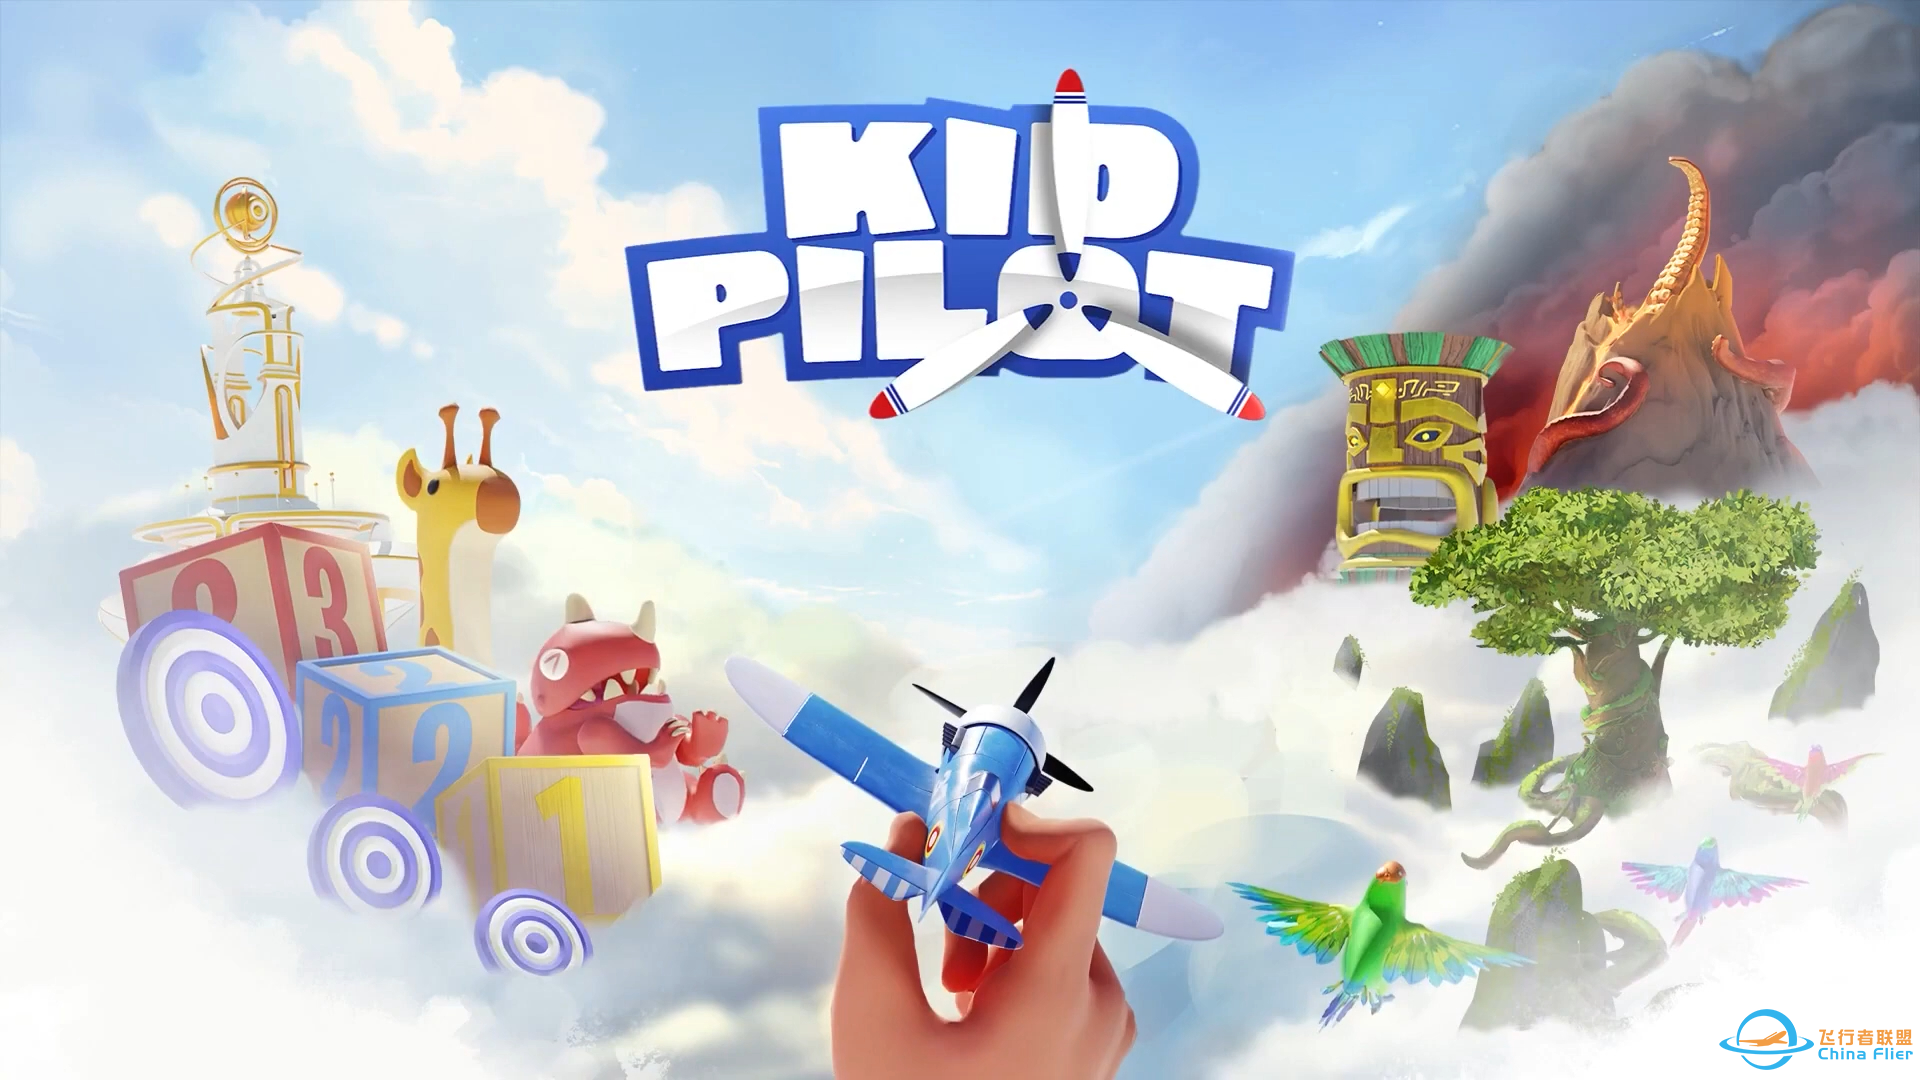 VR飞行玩具模拟器《Kid Pilot | 儿童飞行员》公布发售日期【SteamVR】-750 